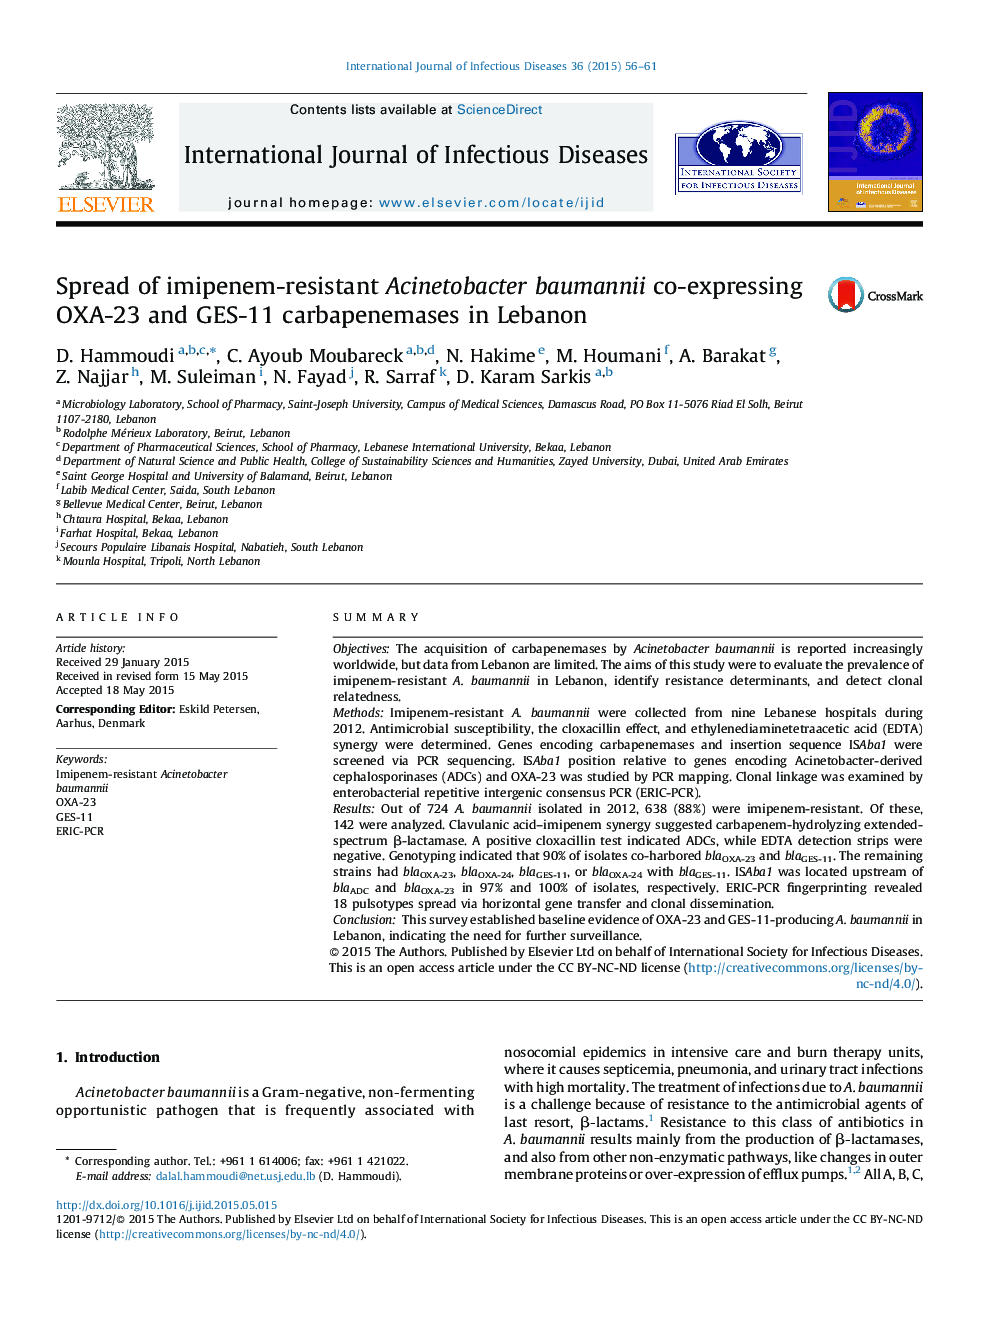 Spread of imipenem-resistant Acinetobacter baumannii co-expressing OXA-23 and GES-11 carbapenemases in Lebanon